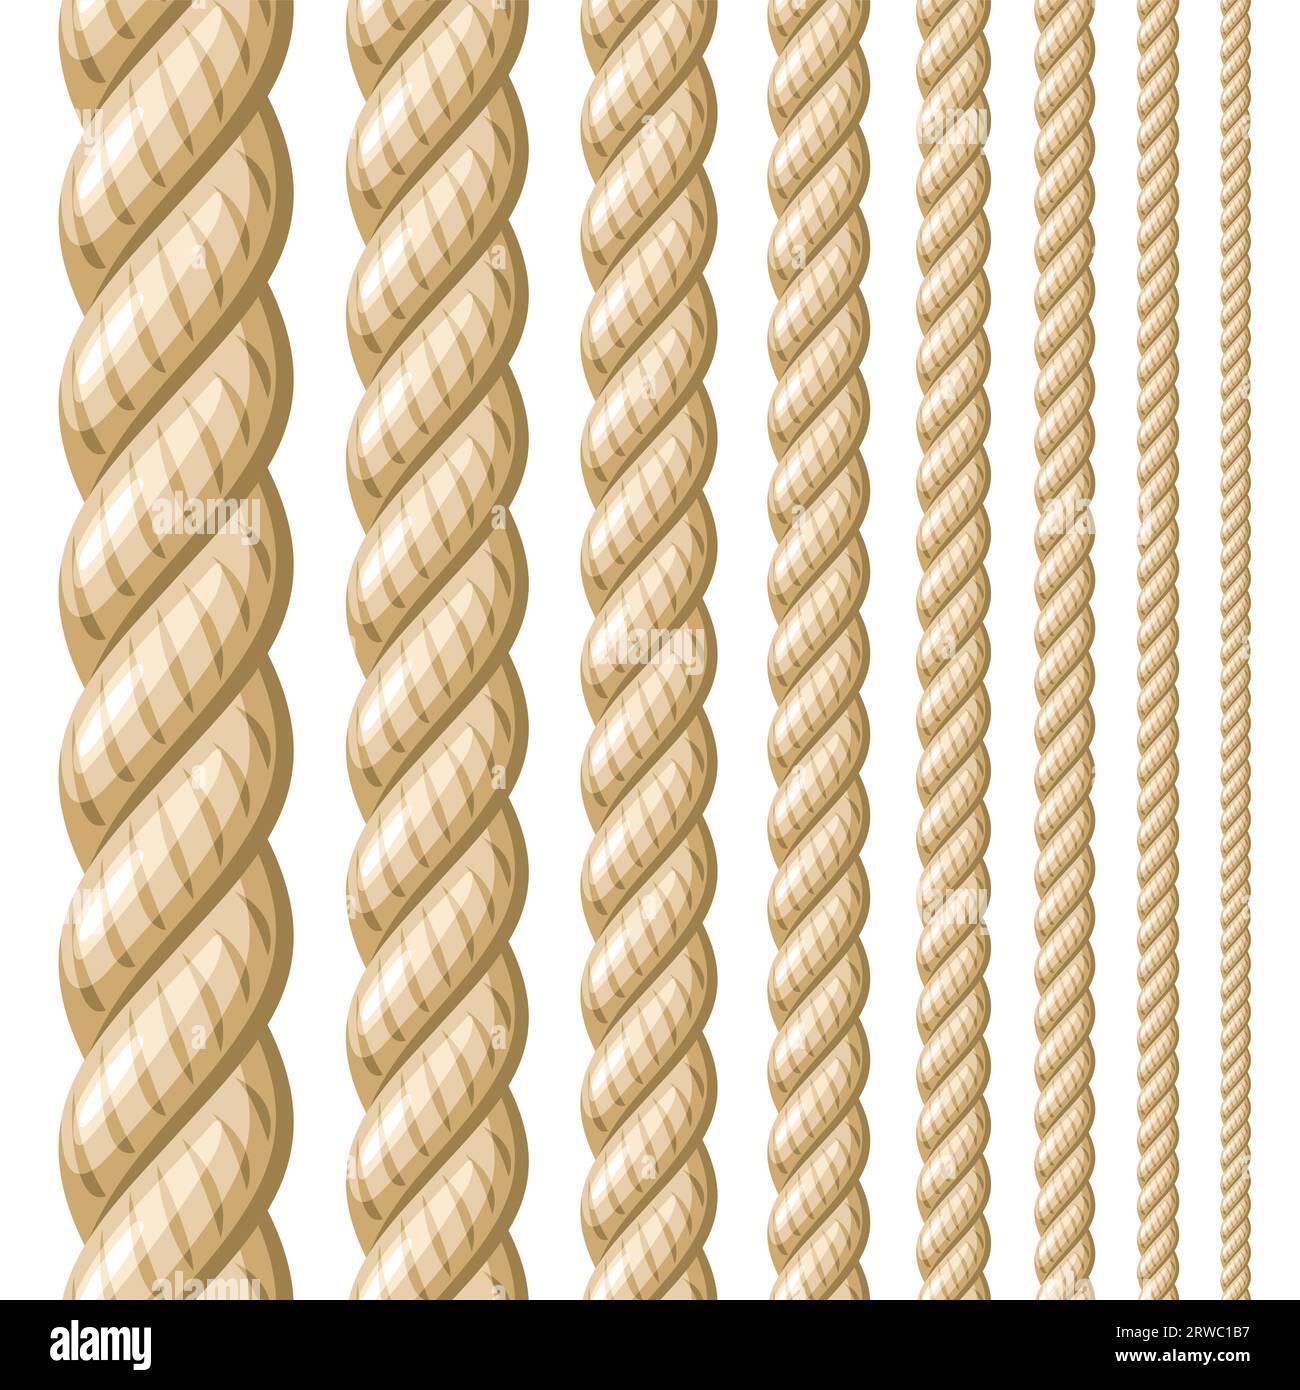 White nylon cord Stock Vector Images - Alamy